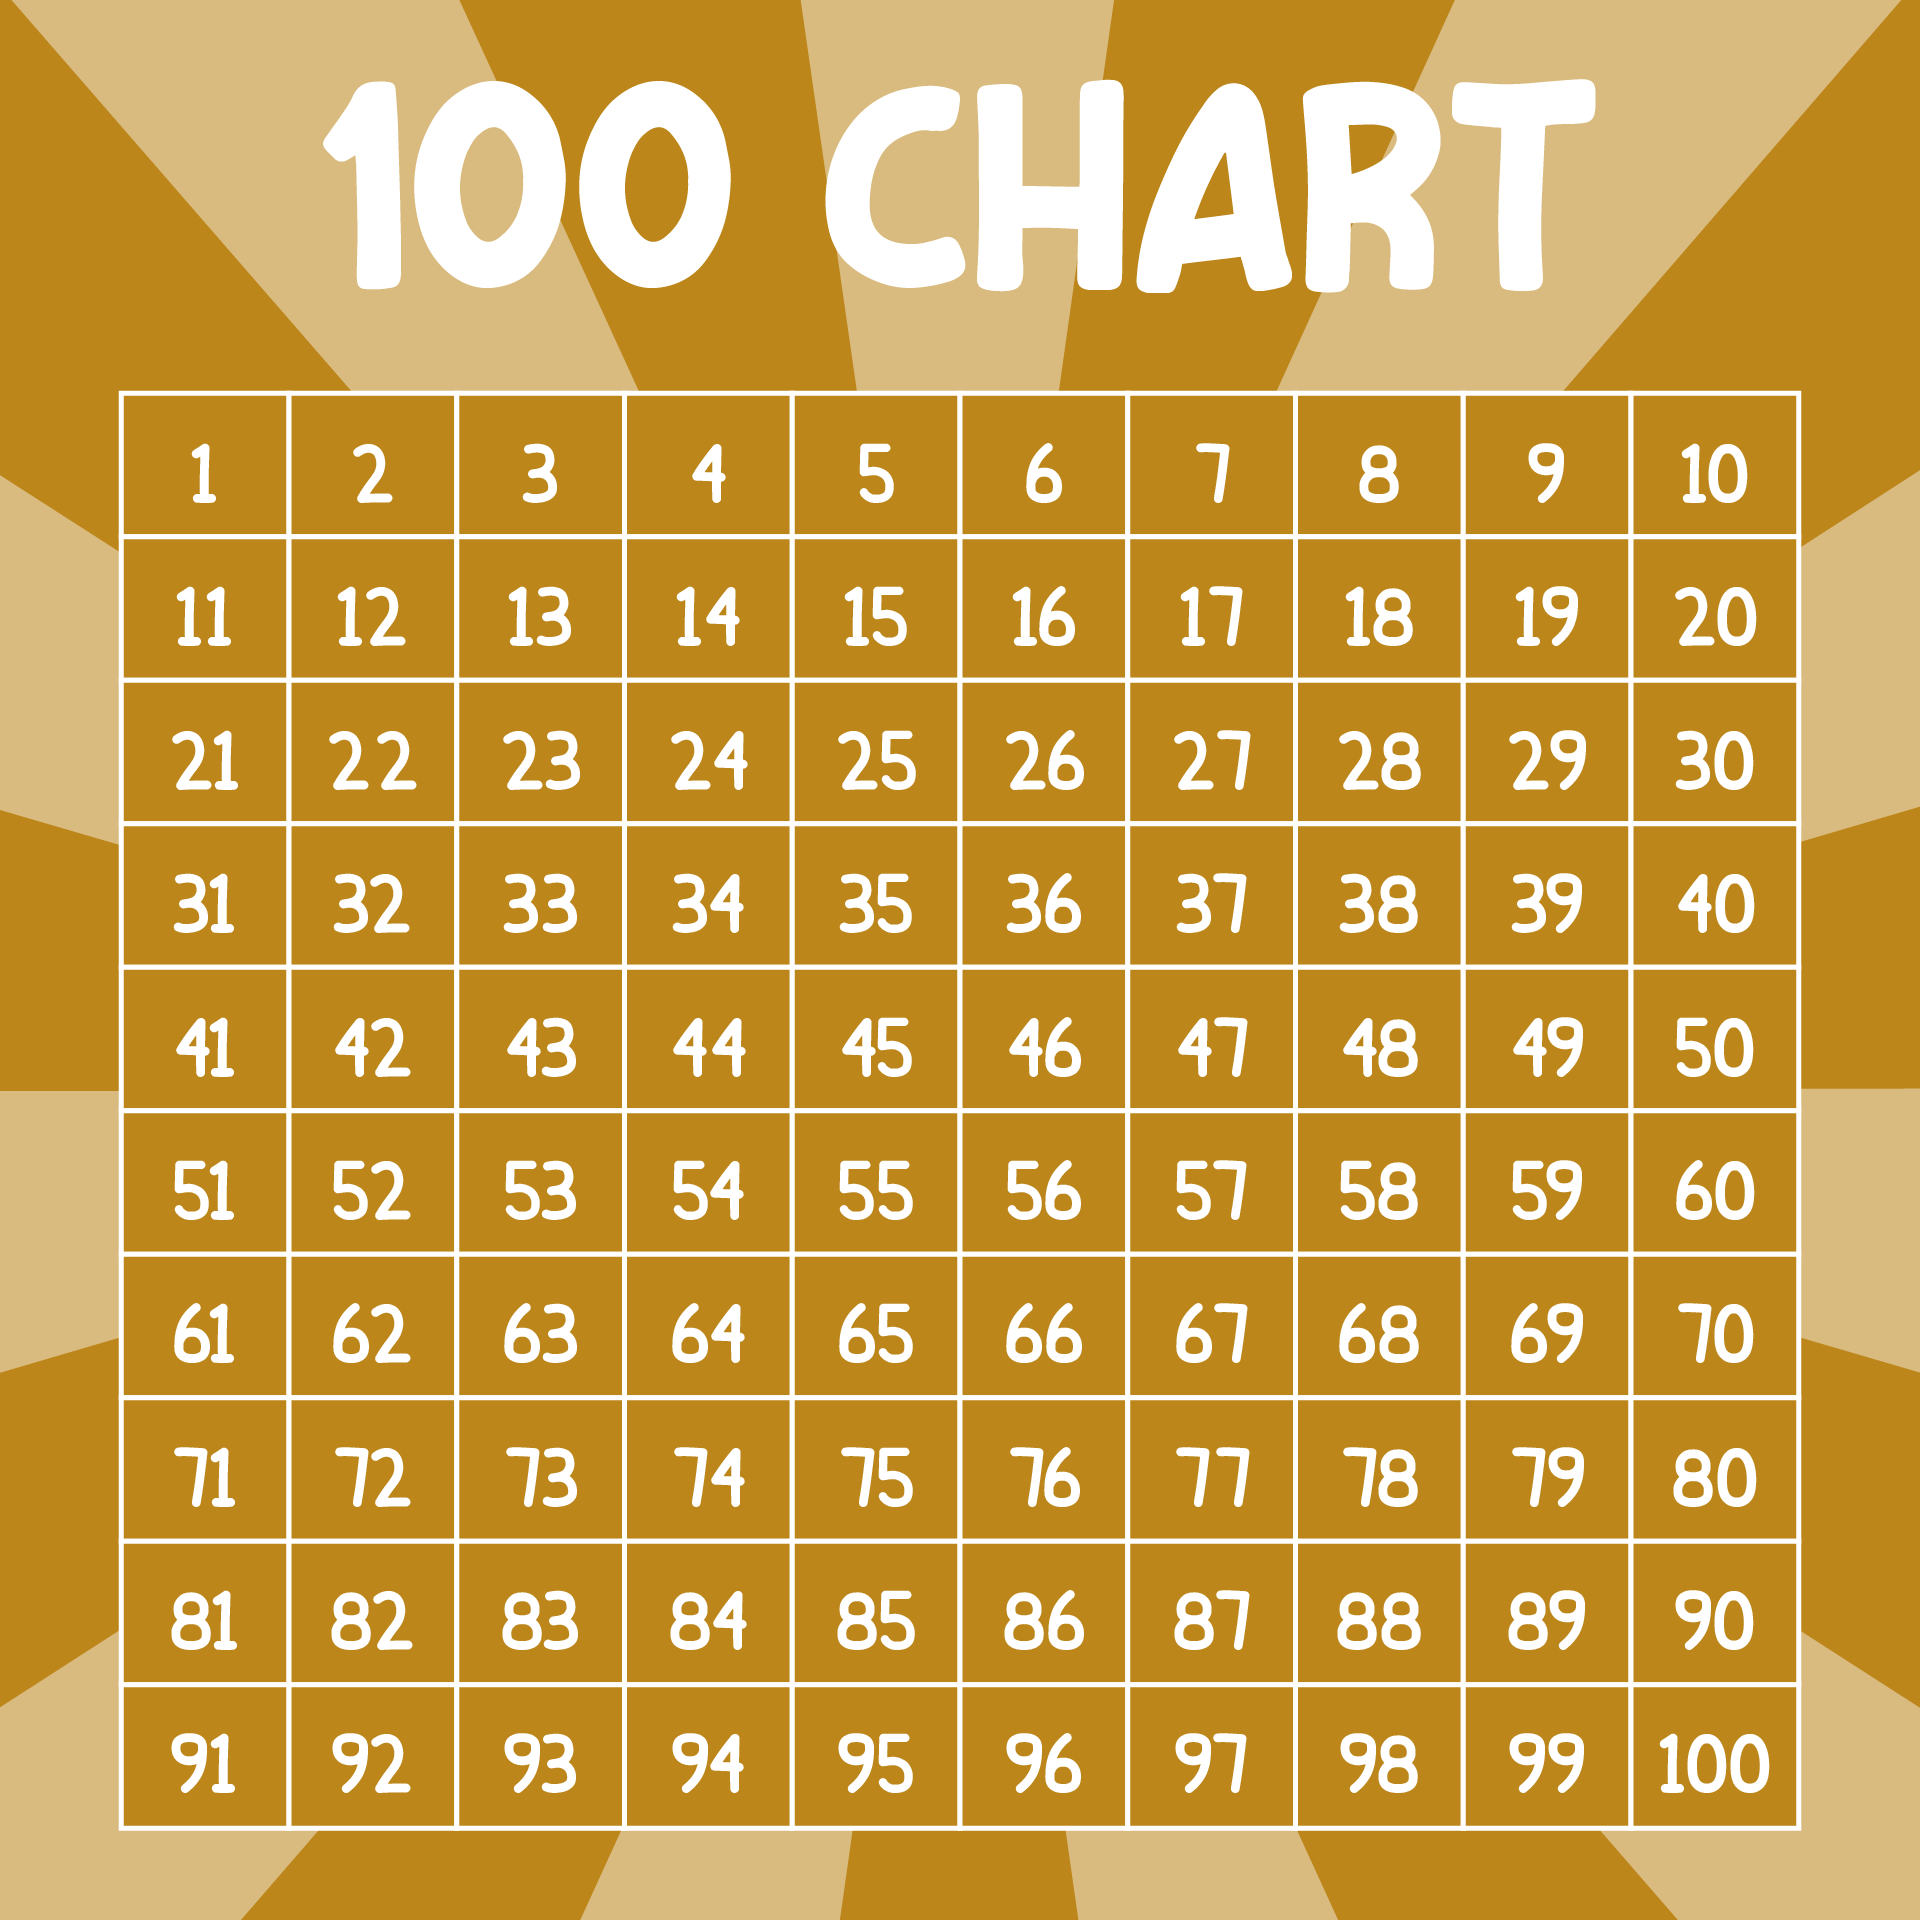 9 Best Images of Hundreds Chart Printable PDF - Hundred Printable 100